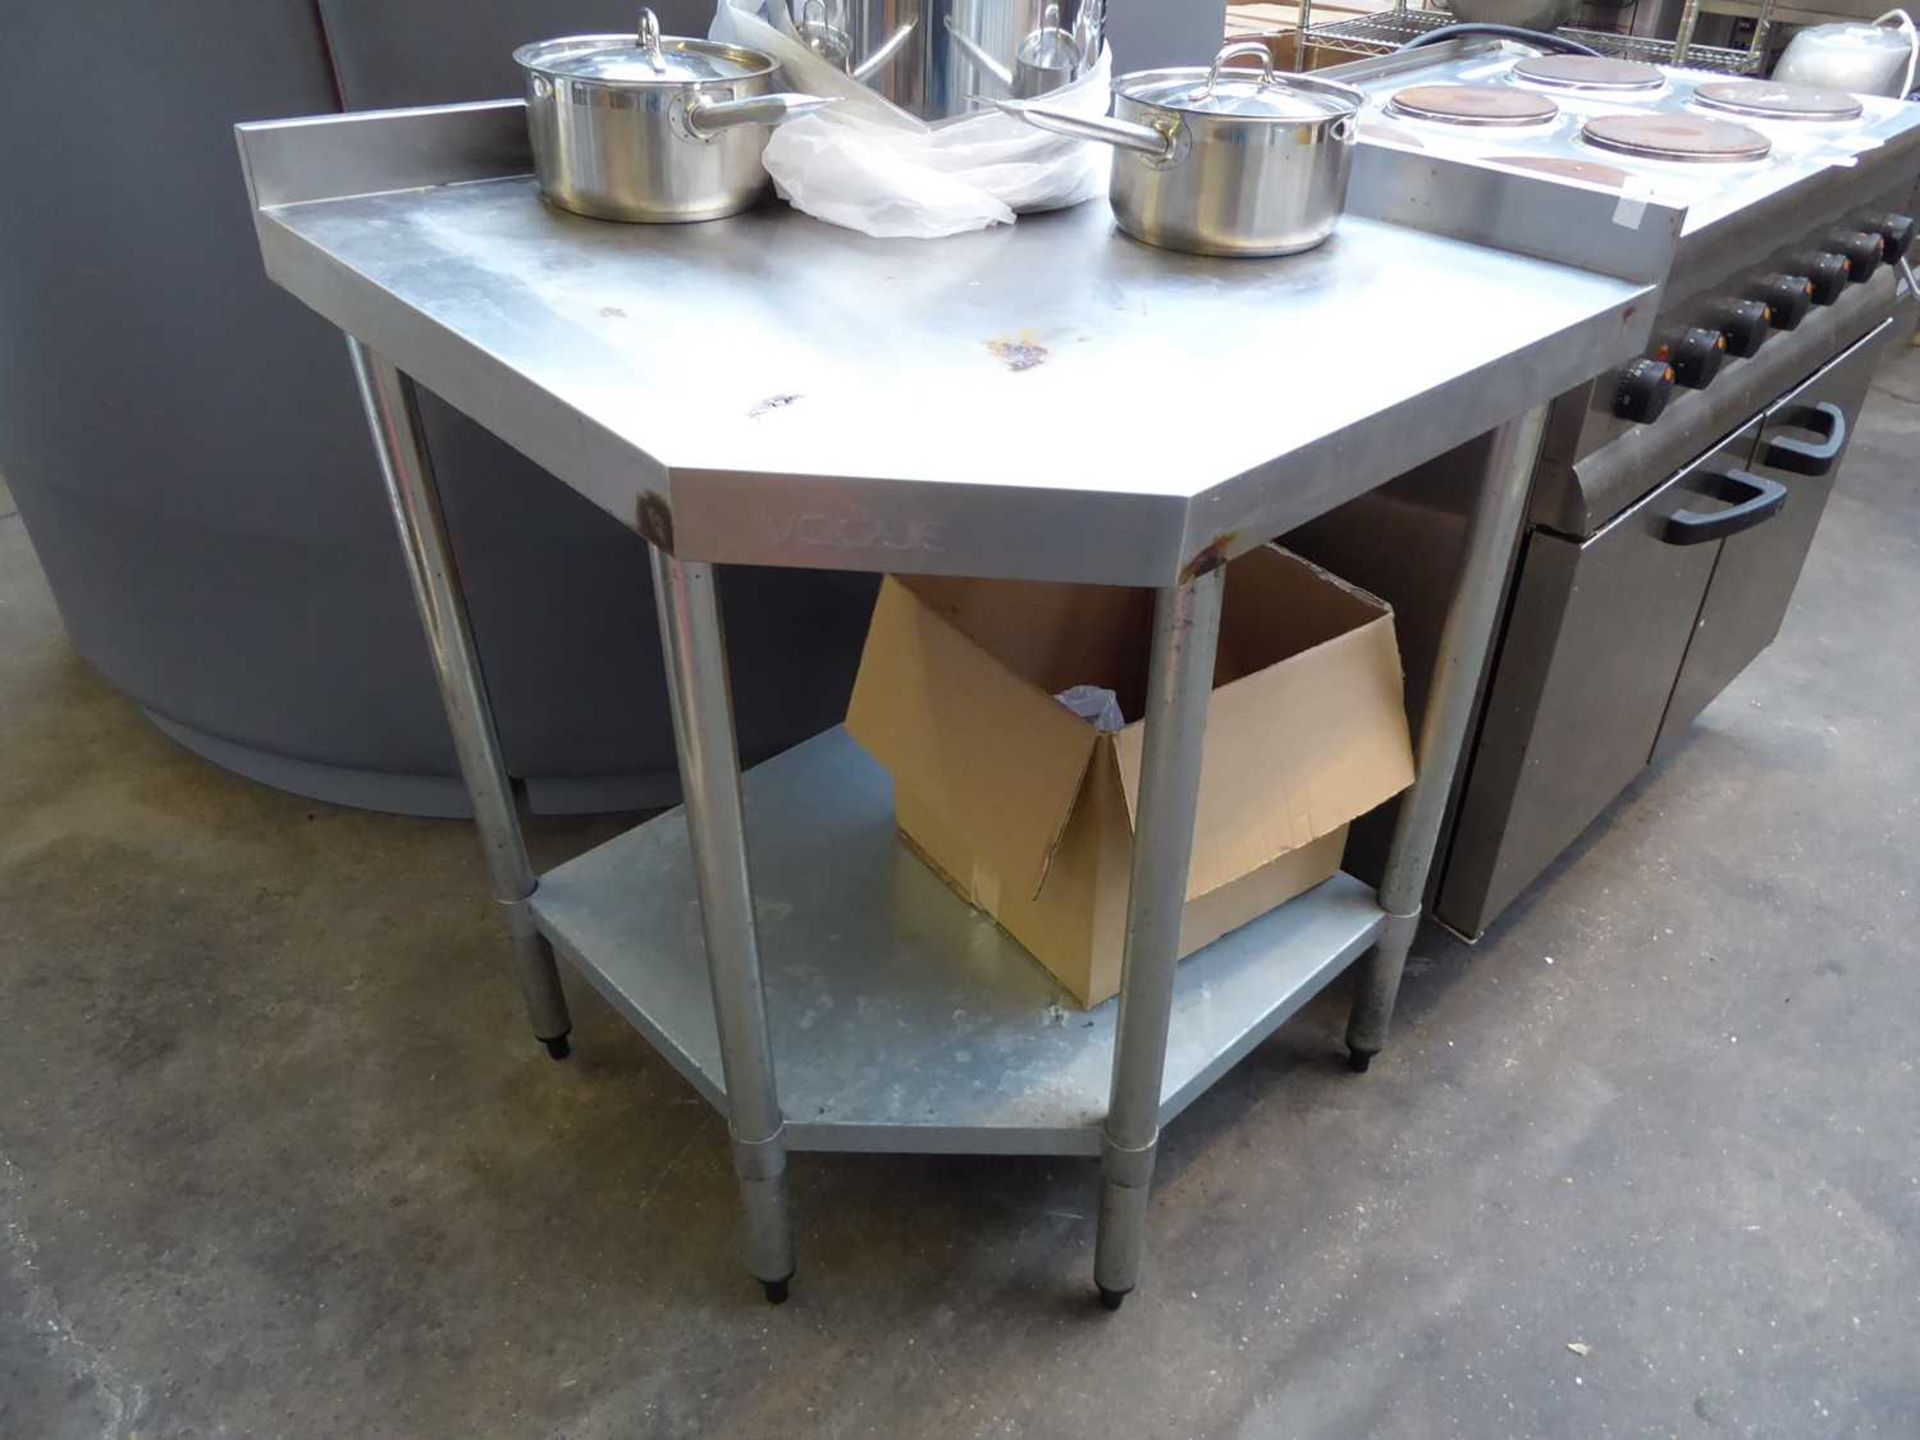 +VAT Stainless steel corner preparation table with shelf under